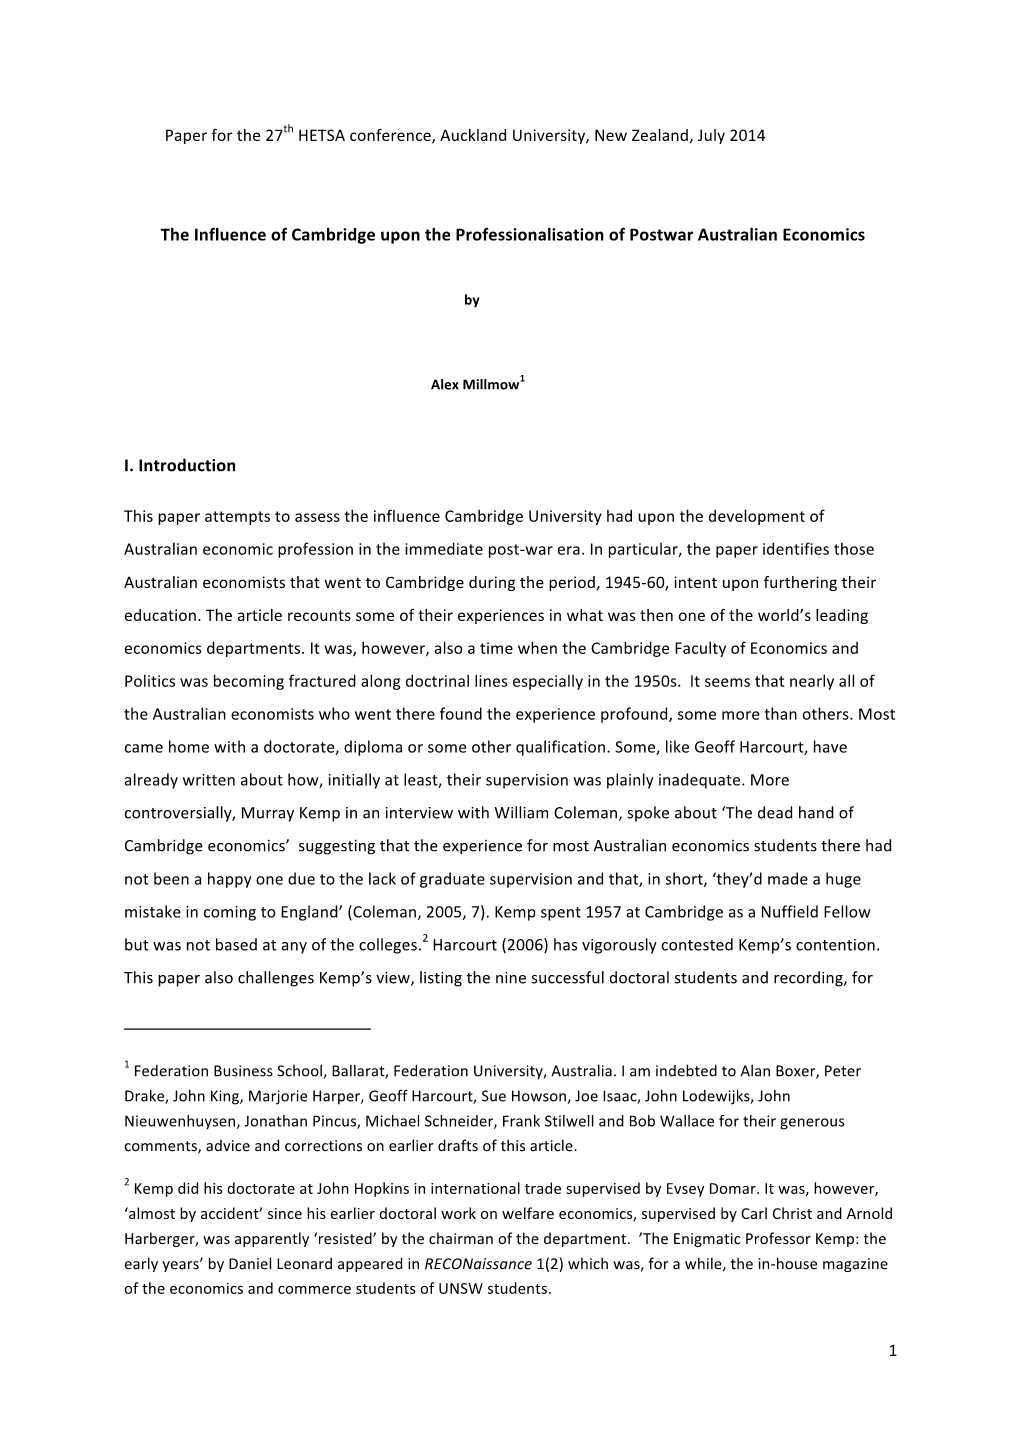 The Influence of Cambridge Upon the Professionalisation of Postwar Australian Economics I. Introduction